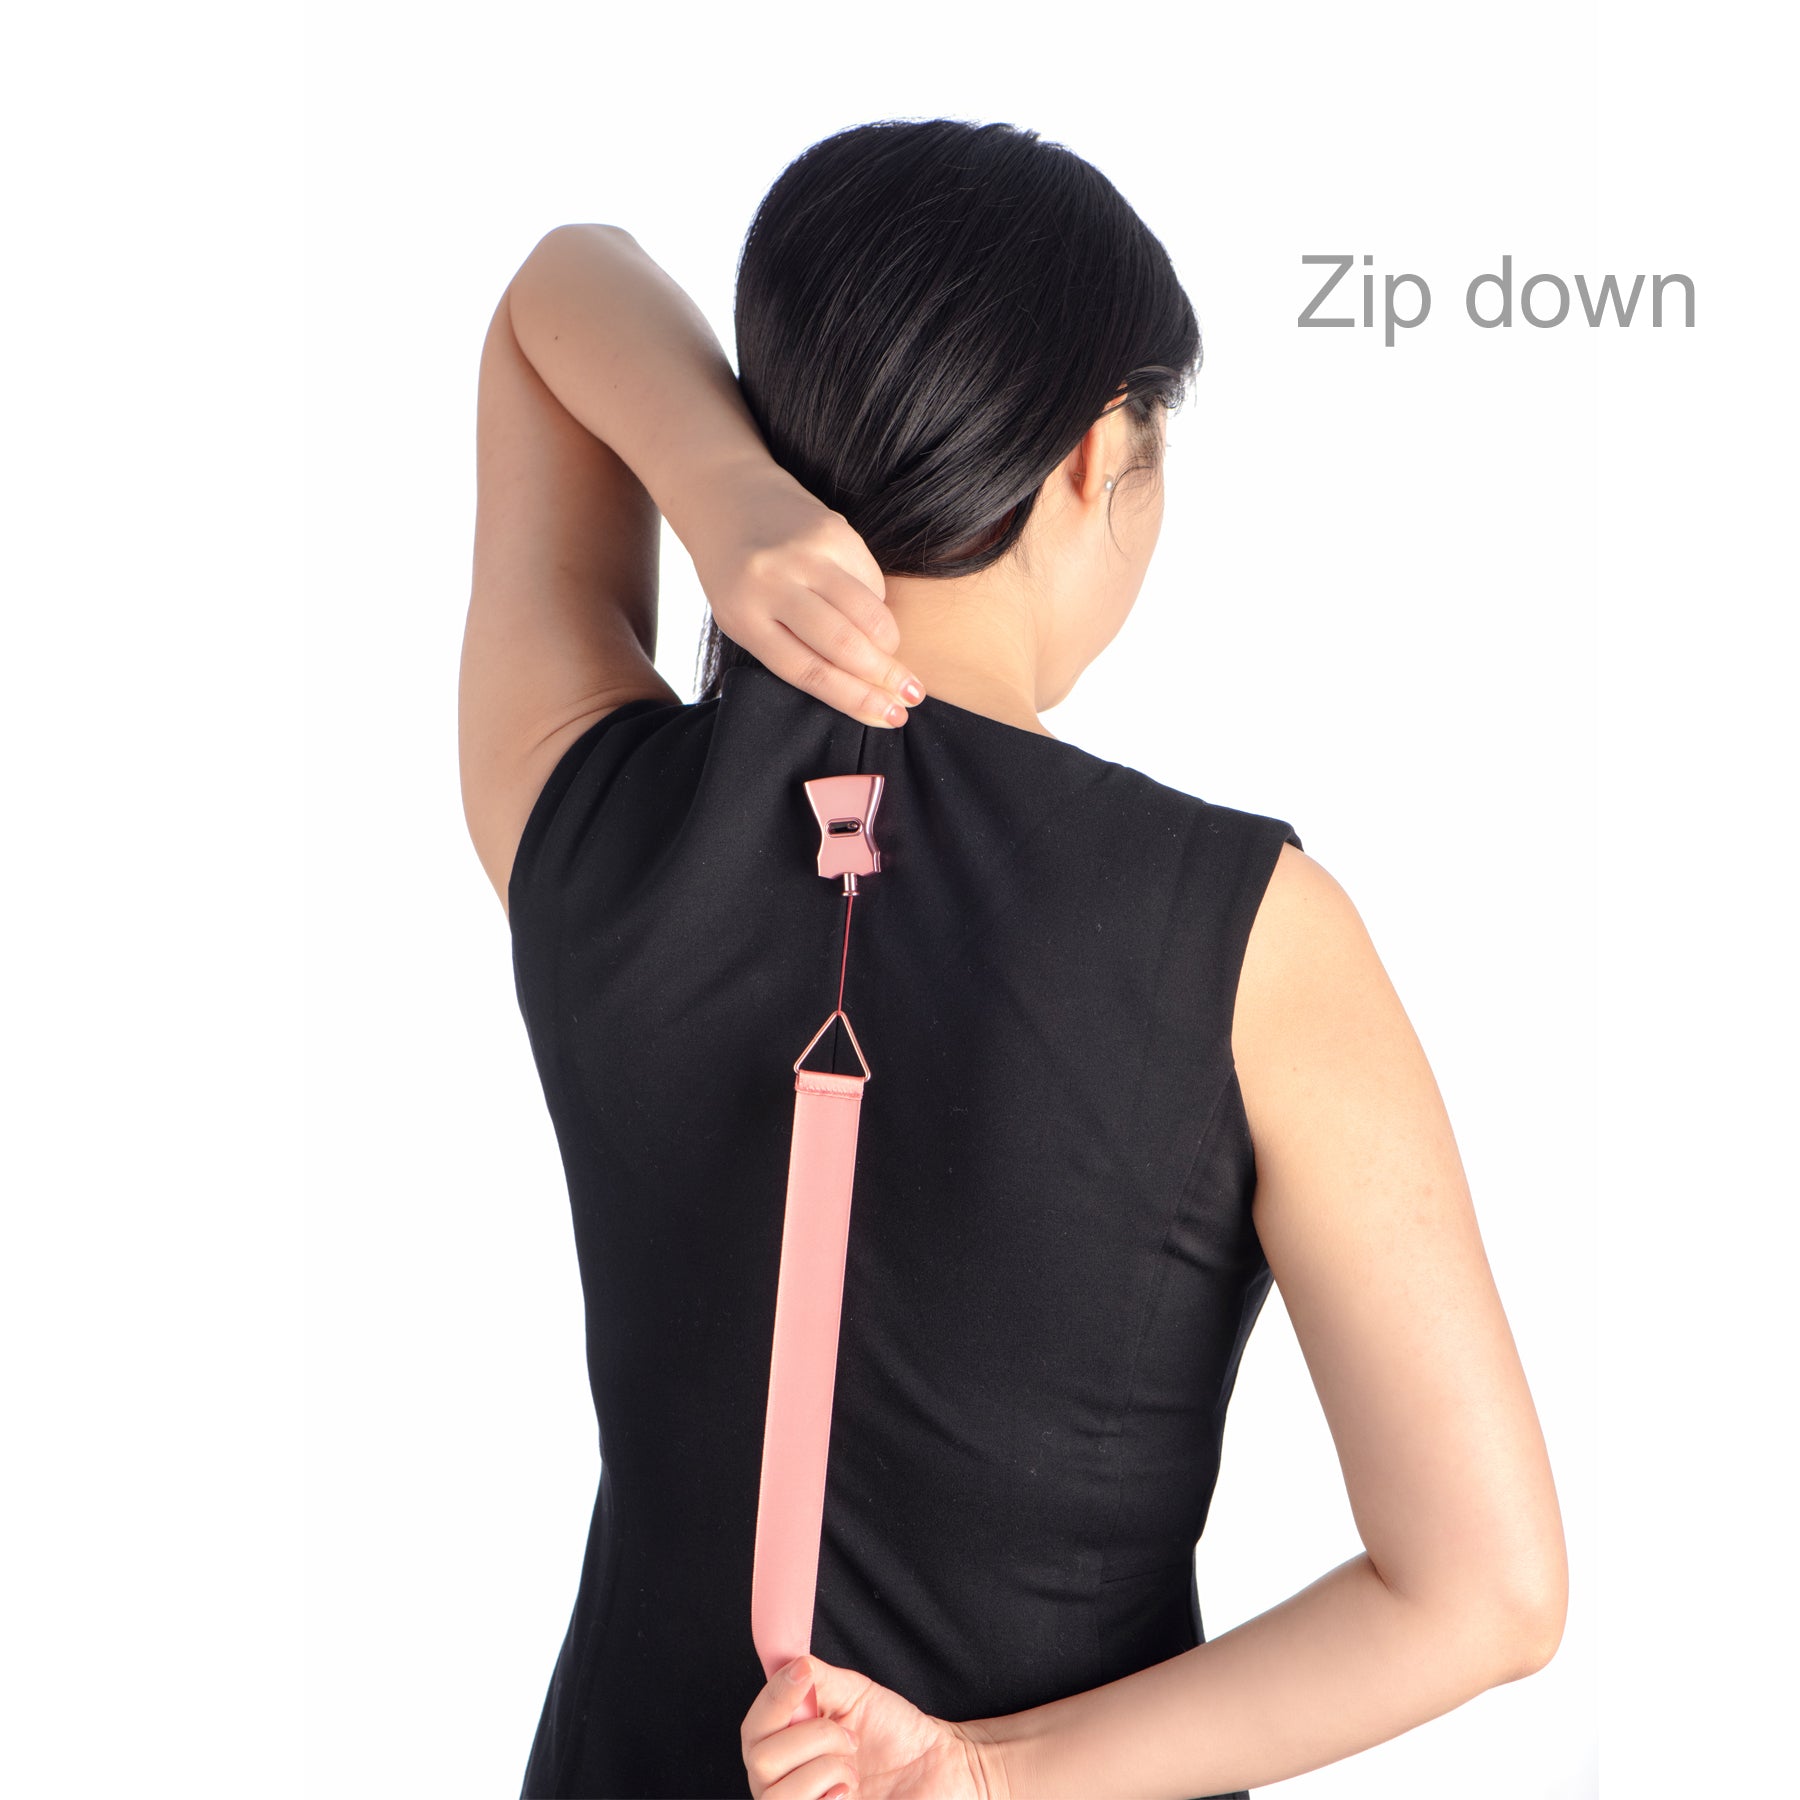 Zipper Puller Helper Easy to Zip up Dress by Yourself